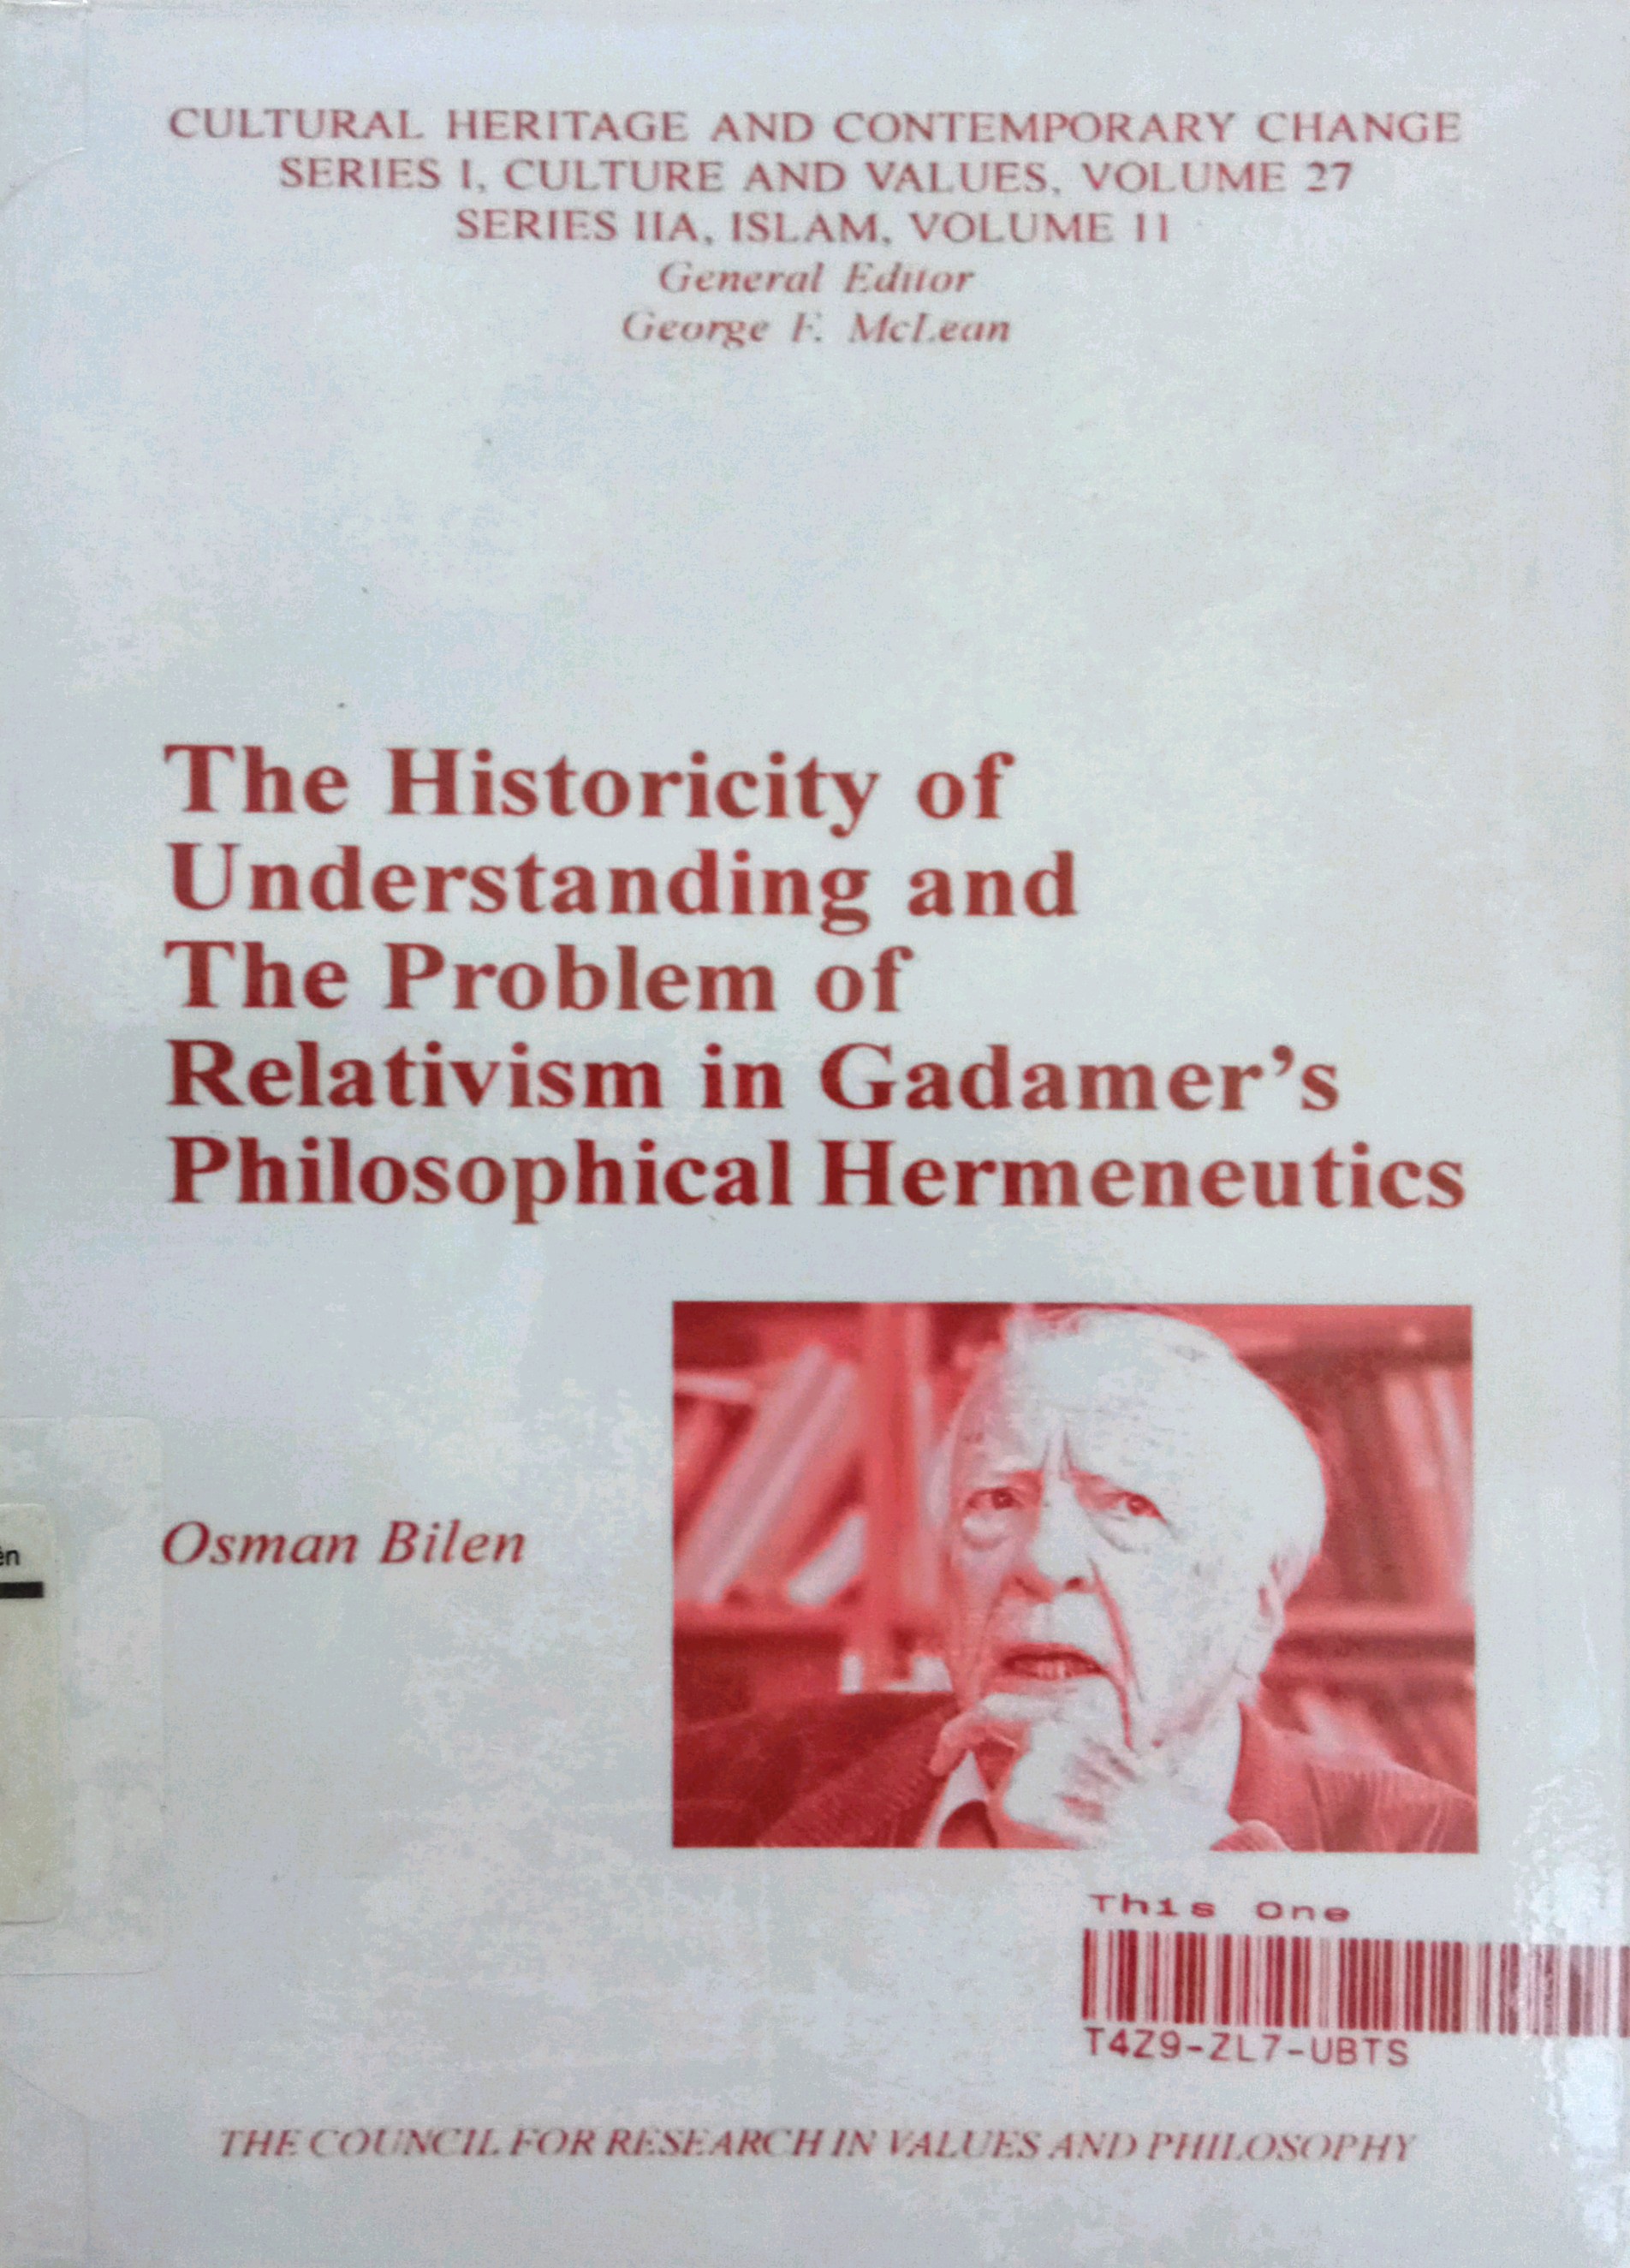 THE HISTORICITY OF UNDERSTANDING AND THE PROBLEM OF RELATIVISM IN GADAMER's PHILOSOPHICAL HERMENEUTICS